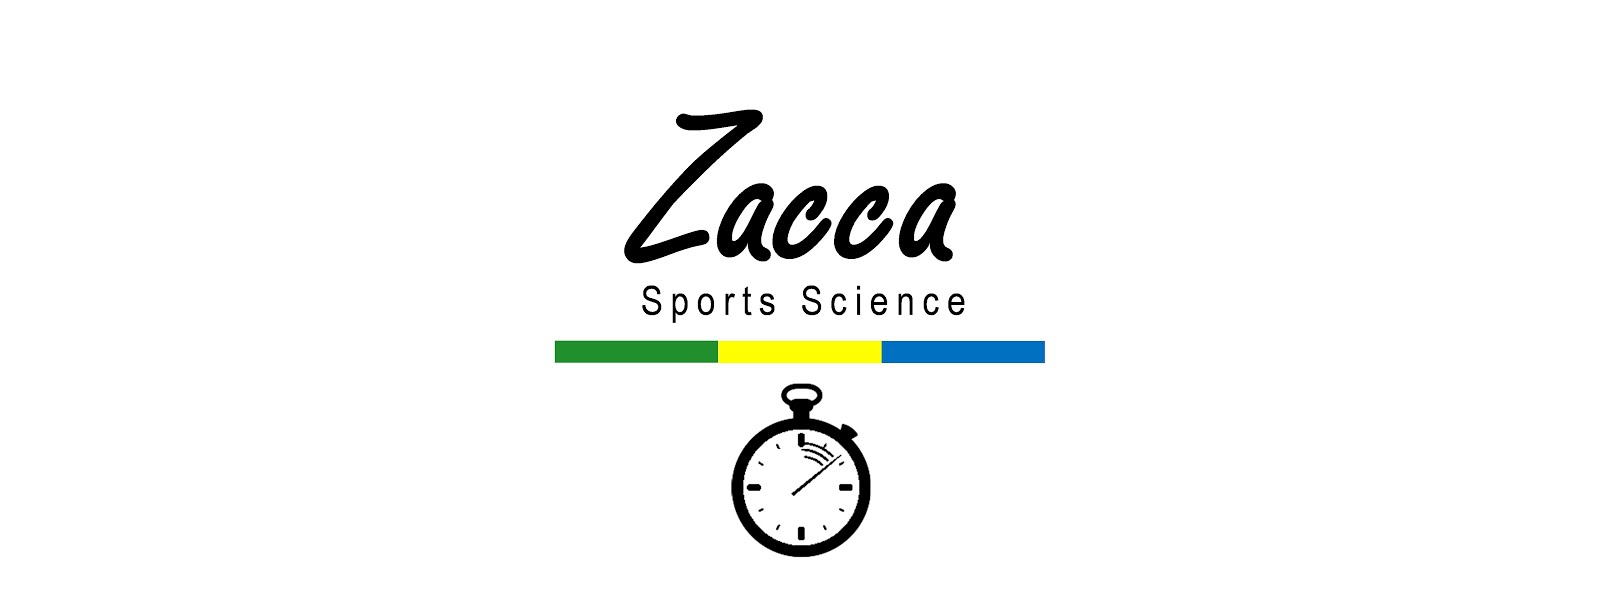 Zacca Sports Science